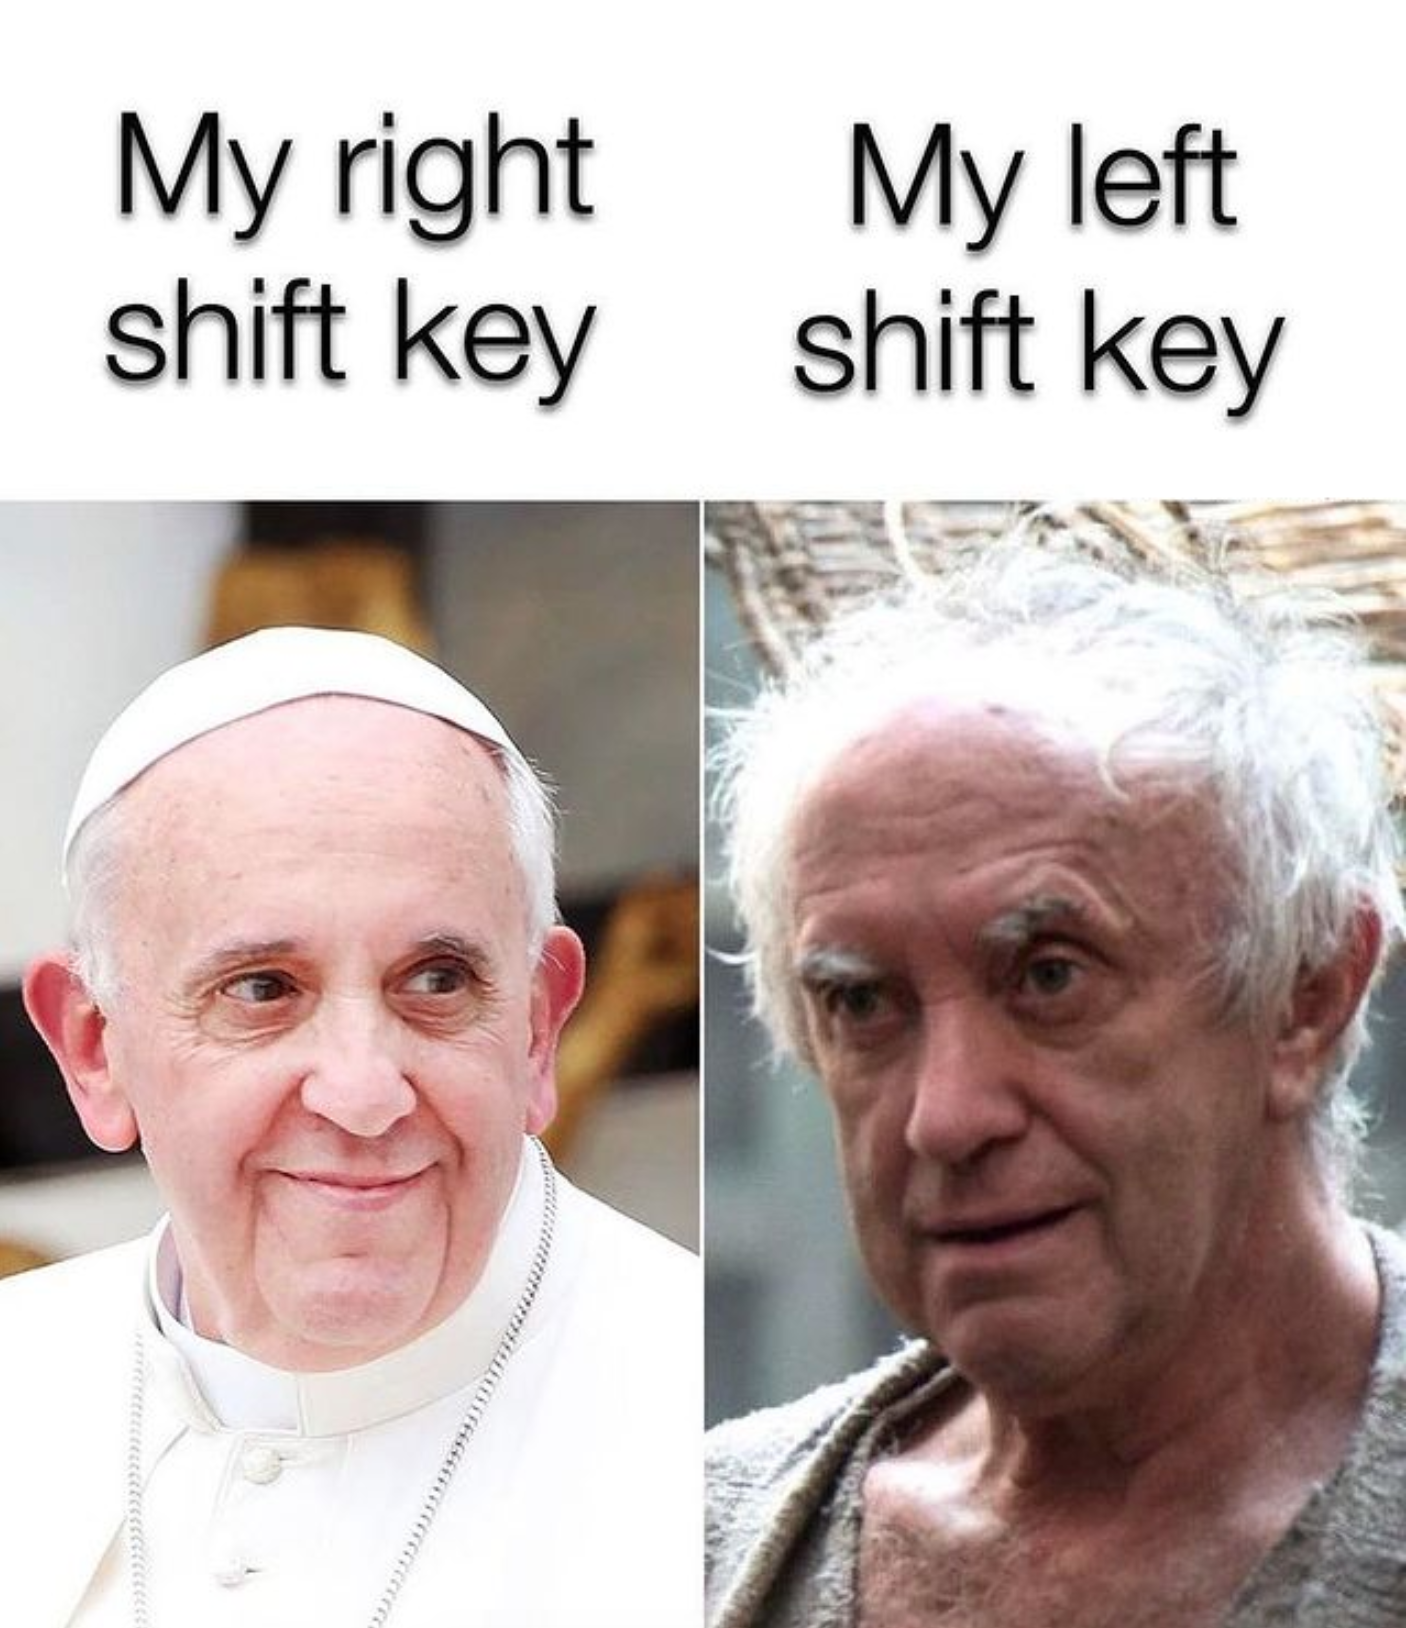 funny gaming memes - my right shift key my left shift key meme - My right shift key shift key My left